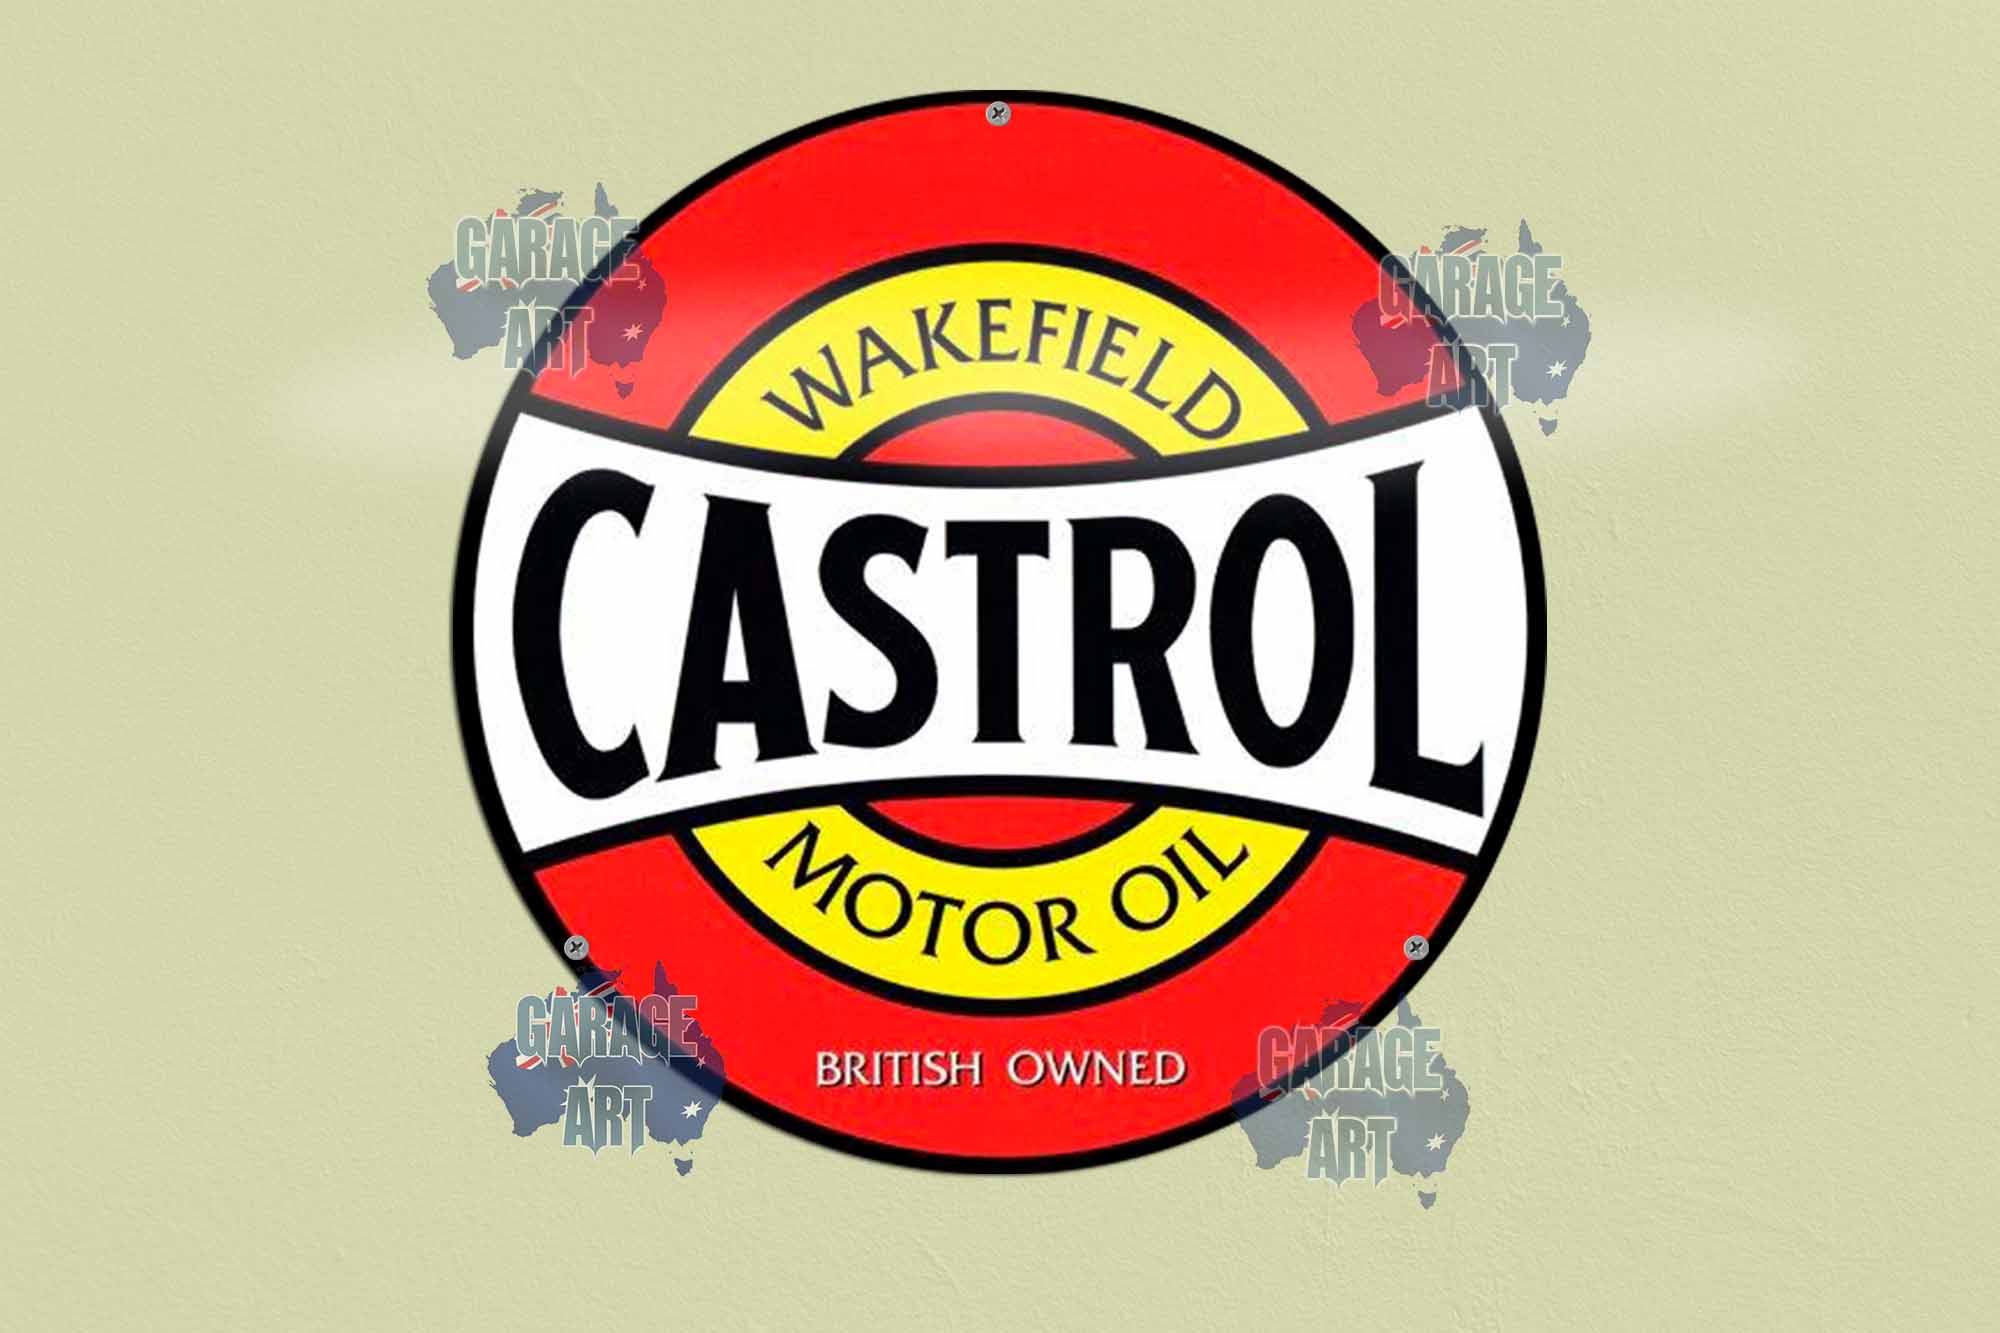 Red Castrol Motor Oil Logo 3D 355mmDIa Tin Sign freeshipping - garageartaustralia